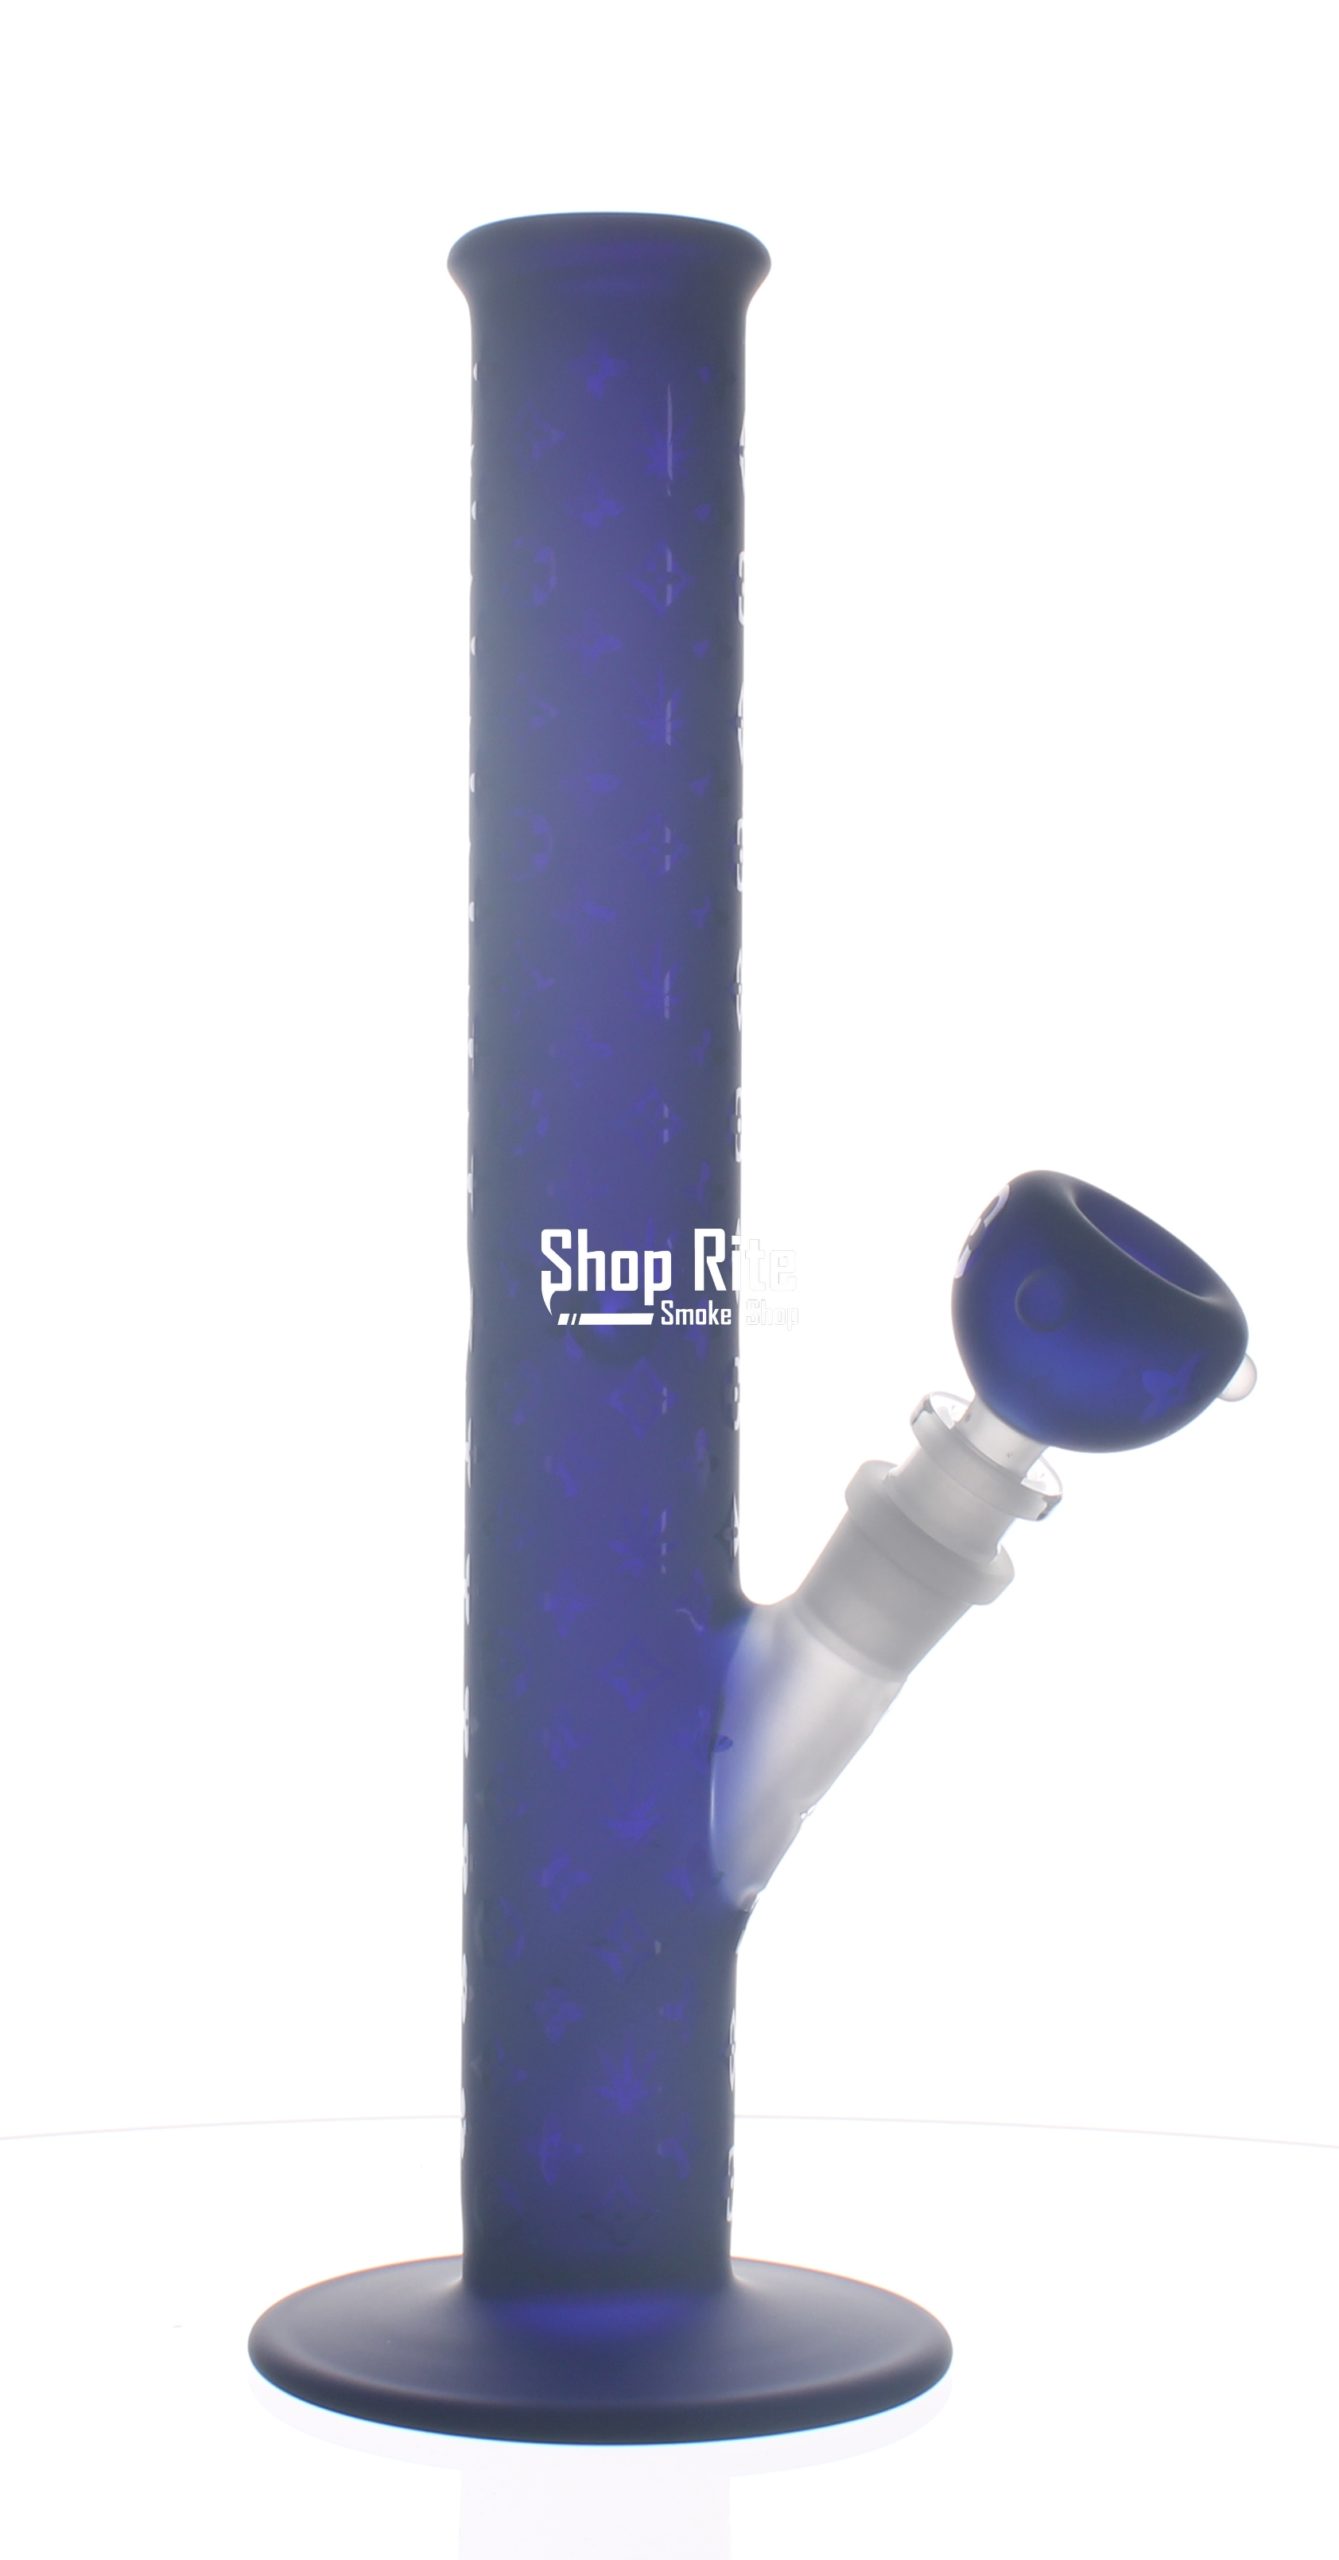 Buy Now Louis Vuitton Themed Bong Blue at Shoprite Smoke Shop